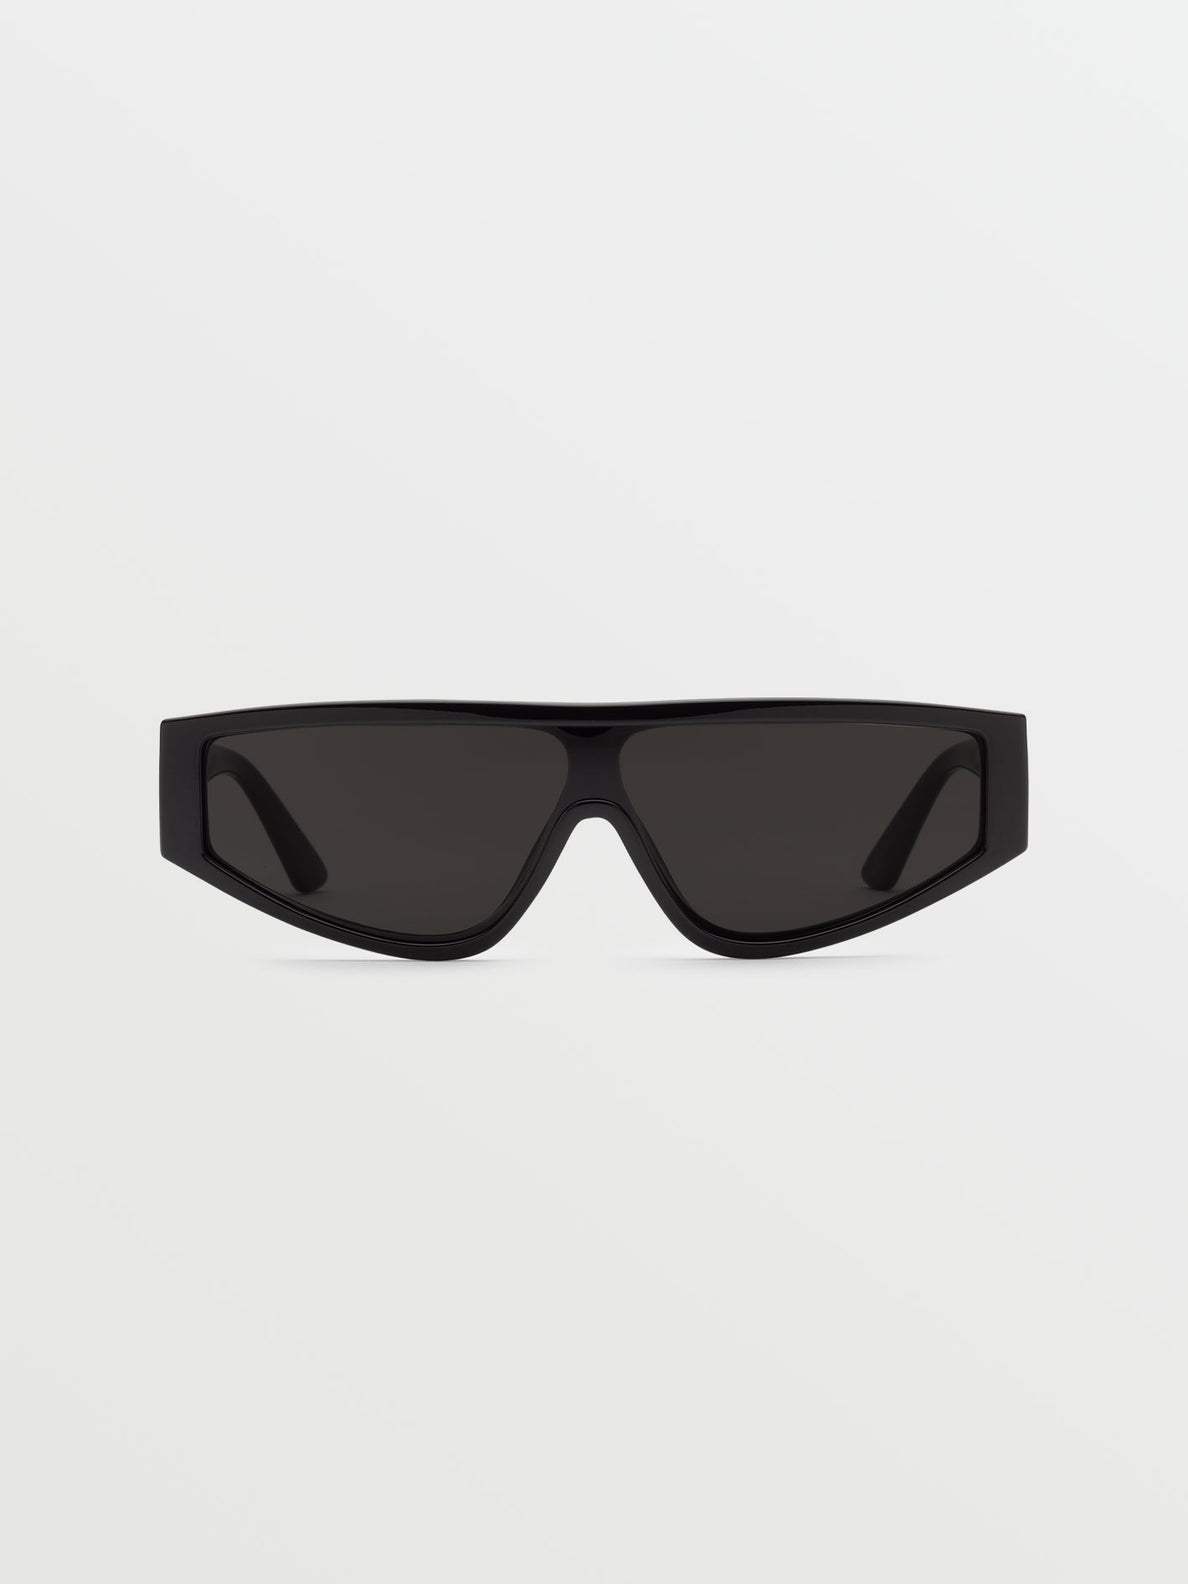 Vinyl Glaze Sunglasses - Grey Gloss Black